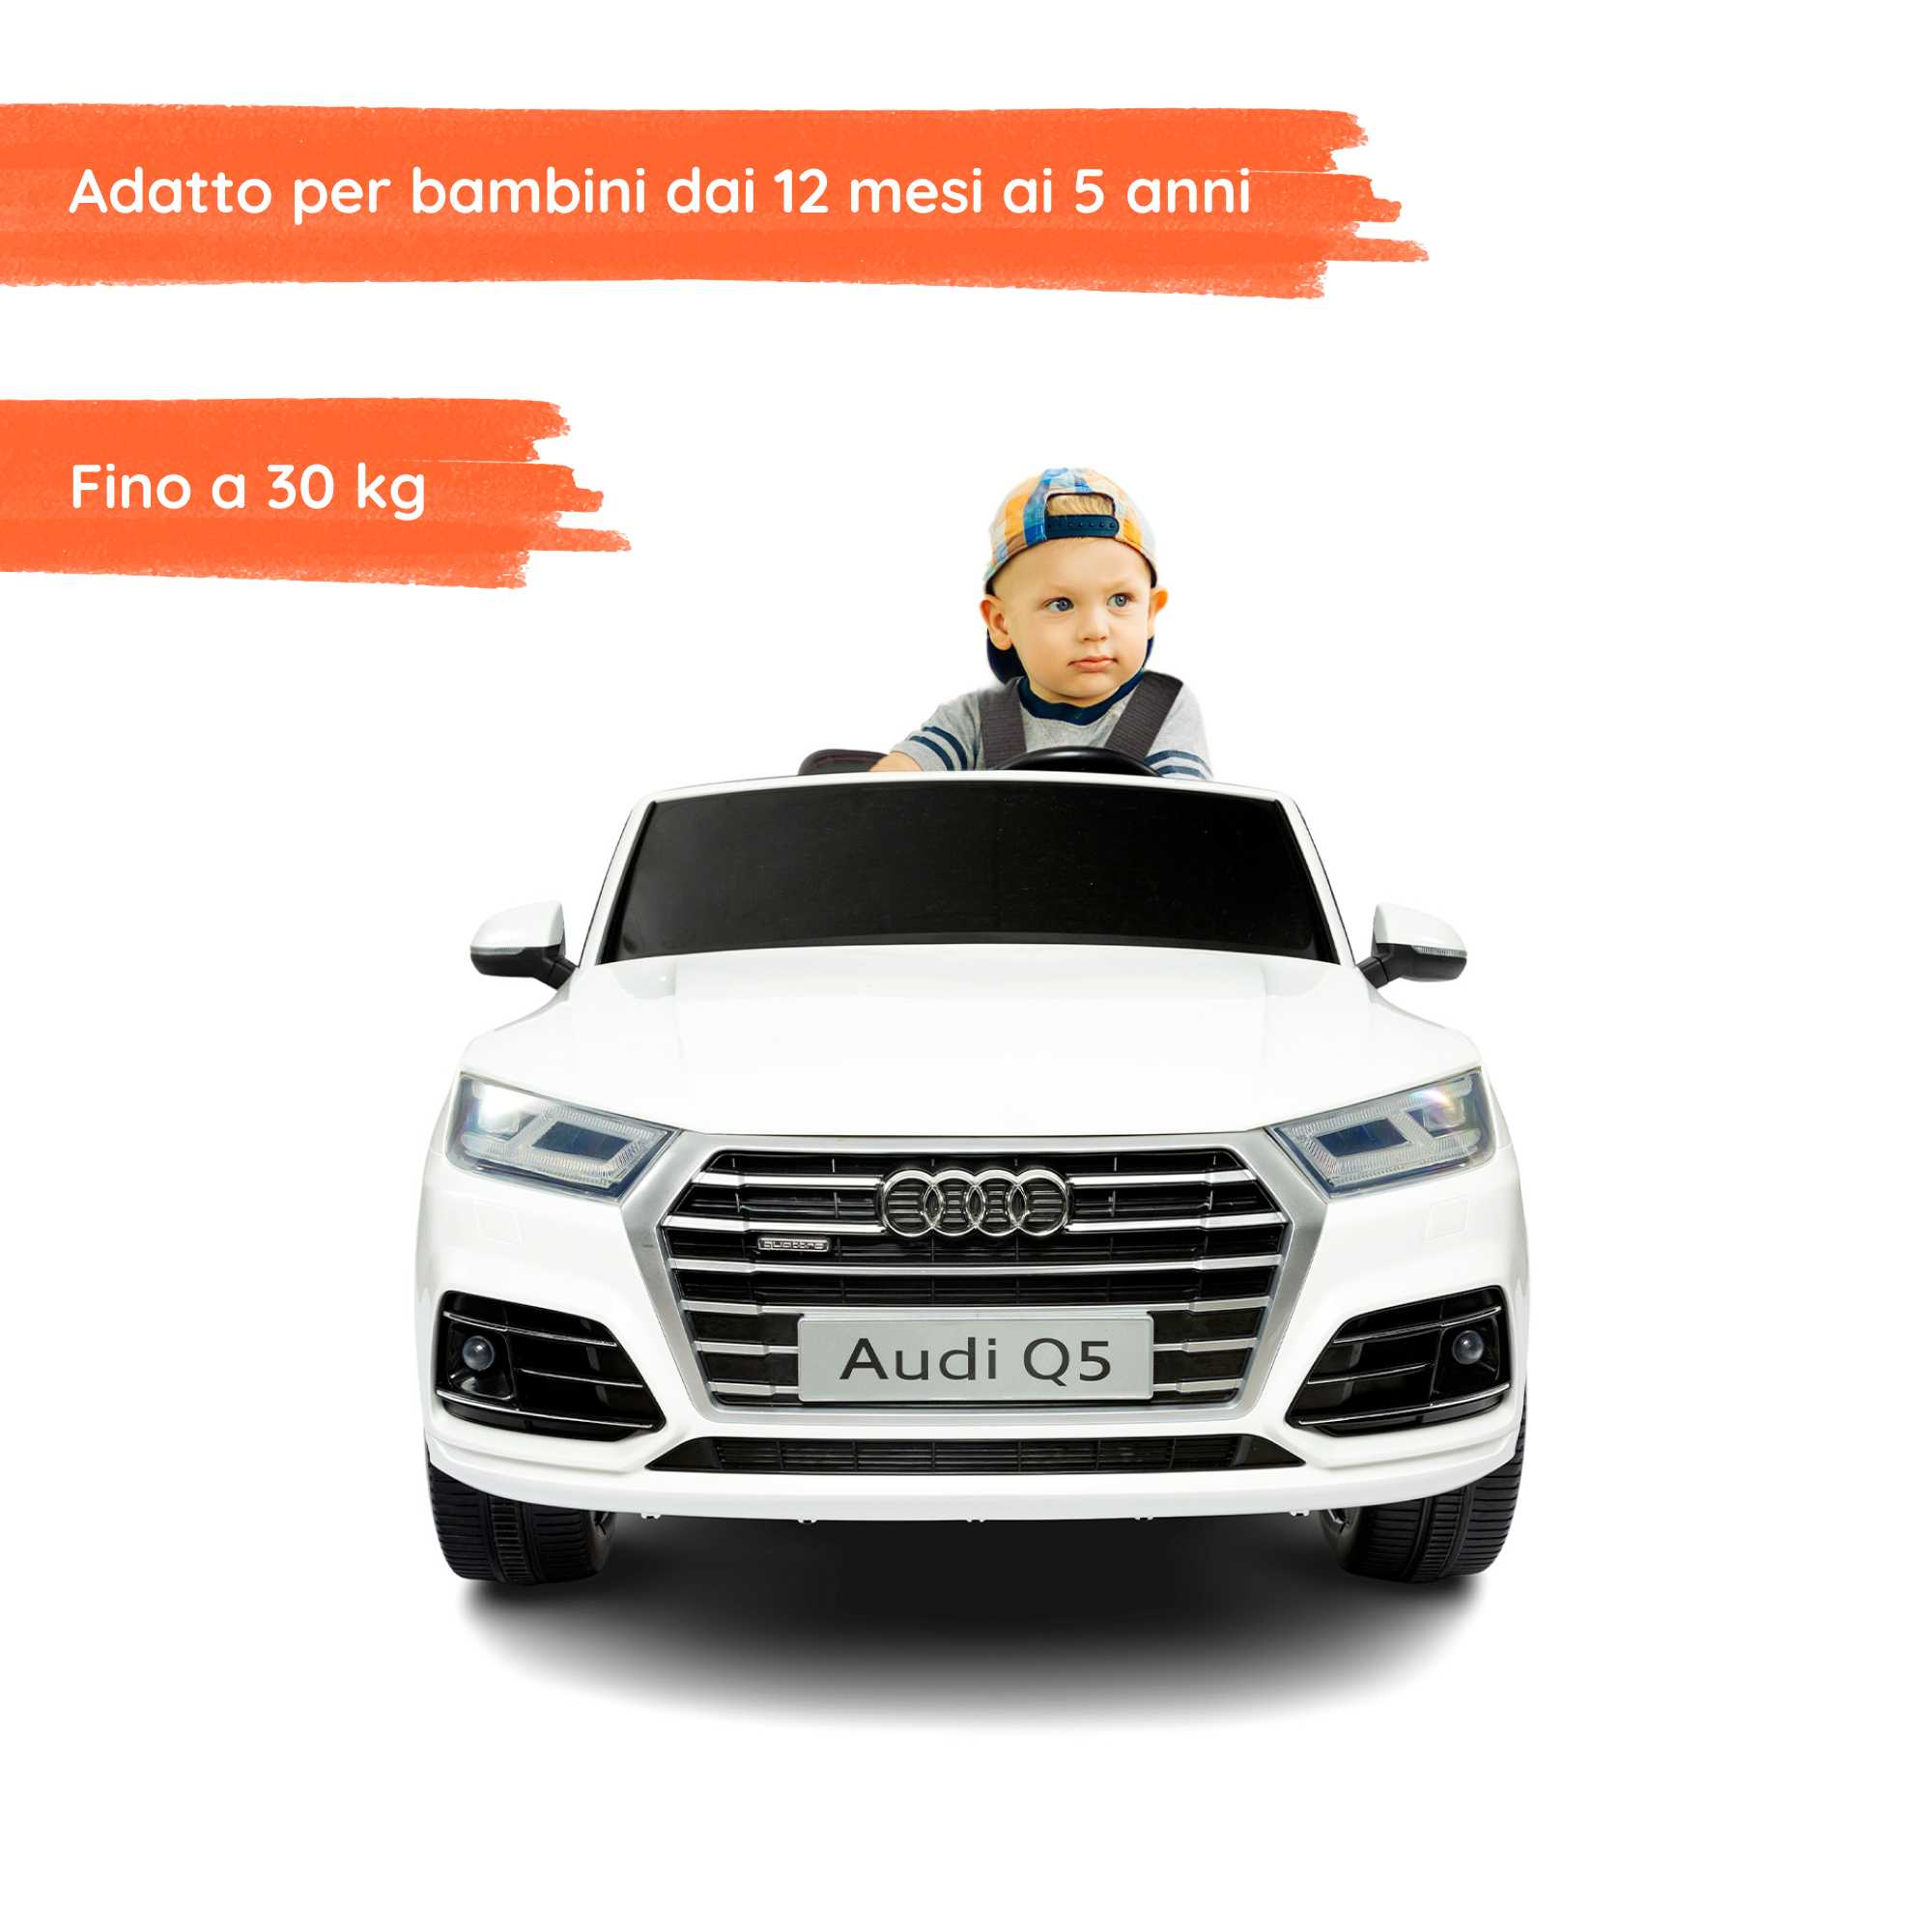 Audi Q5 Bianca con bambino